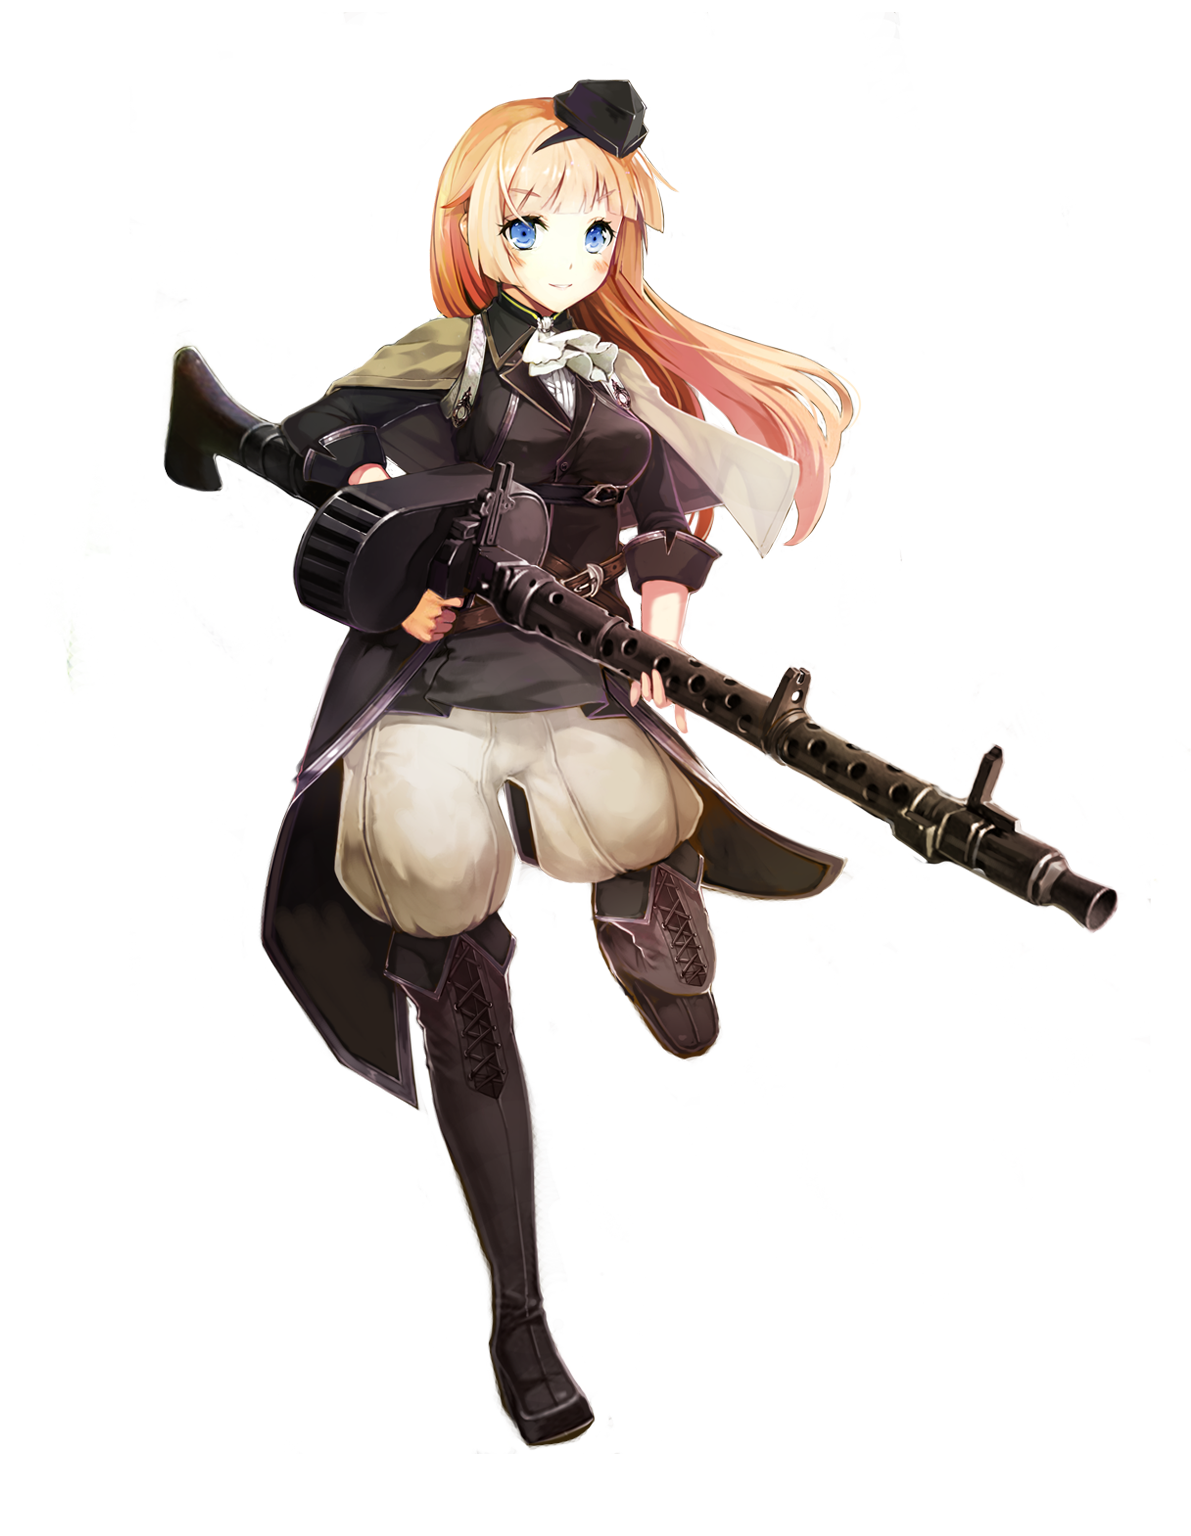 MG-34通用機槍(手遊《少女前線》中登場的角色)